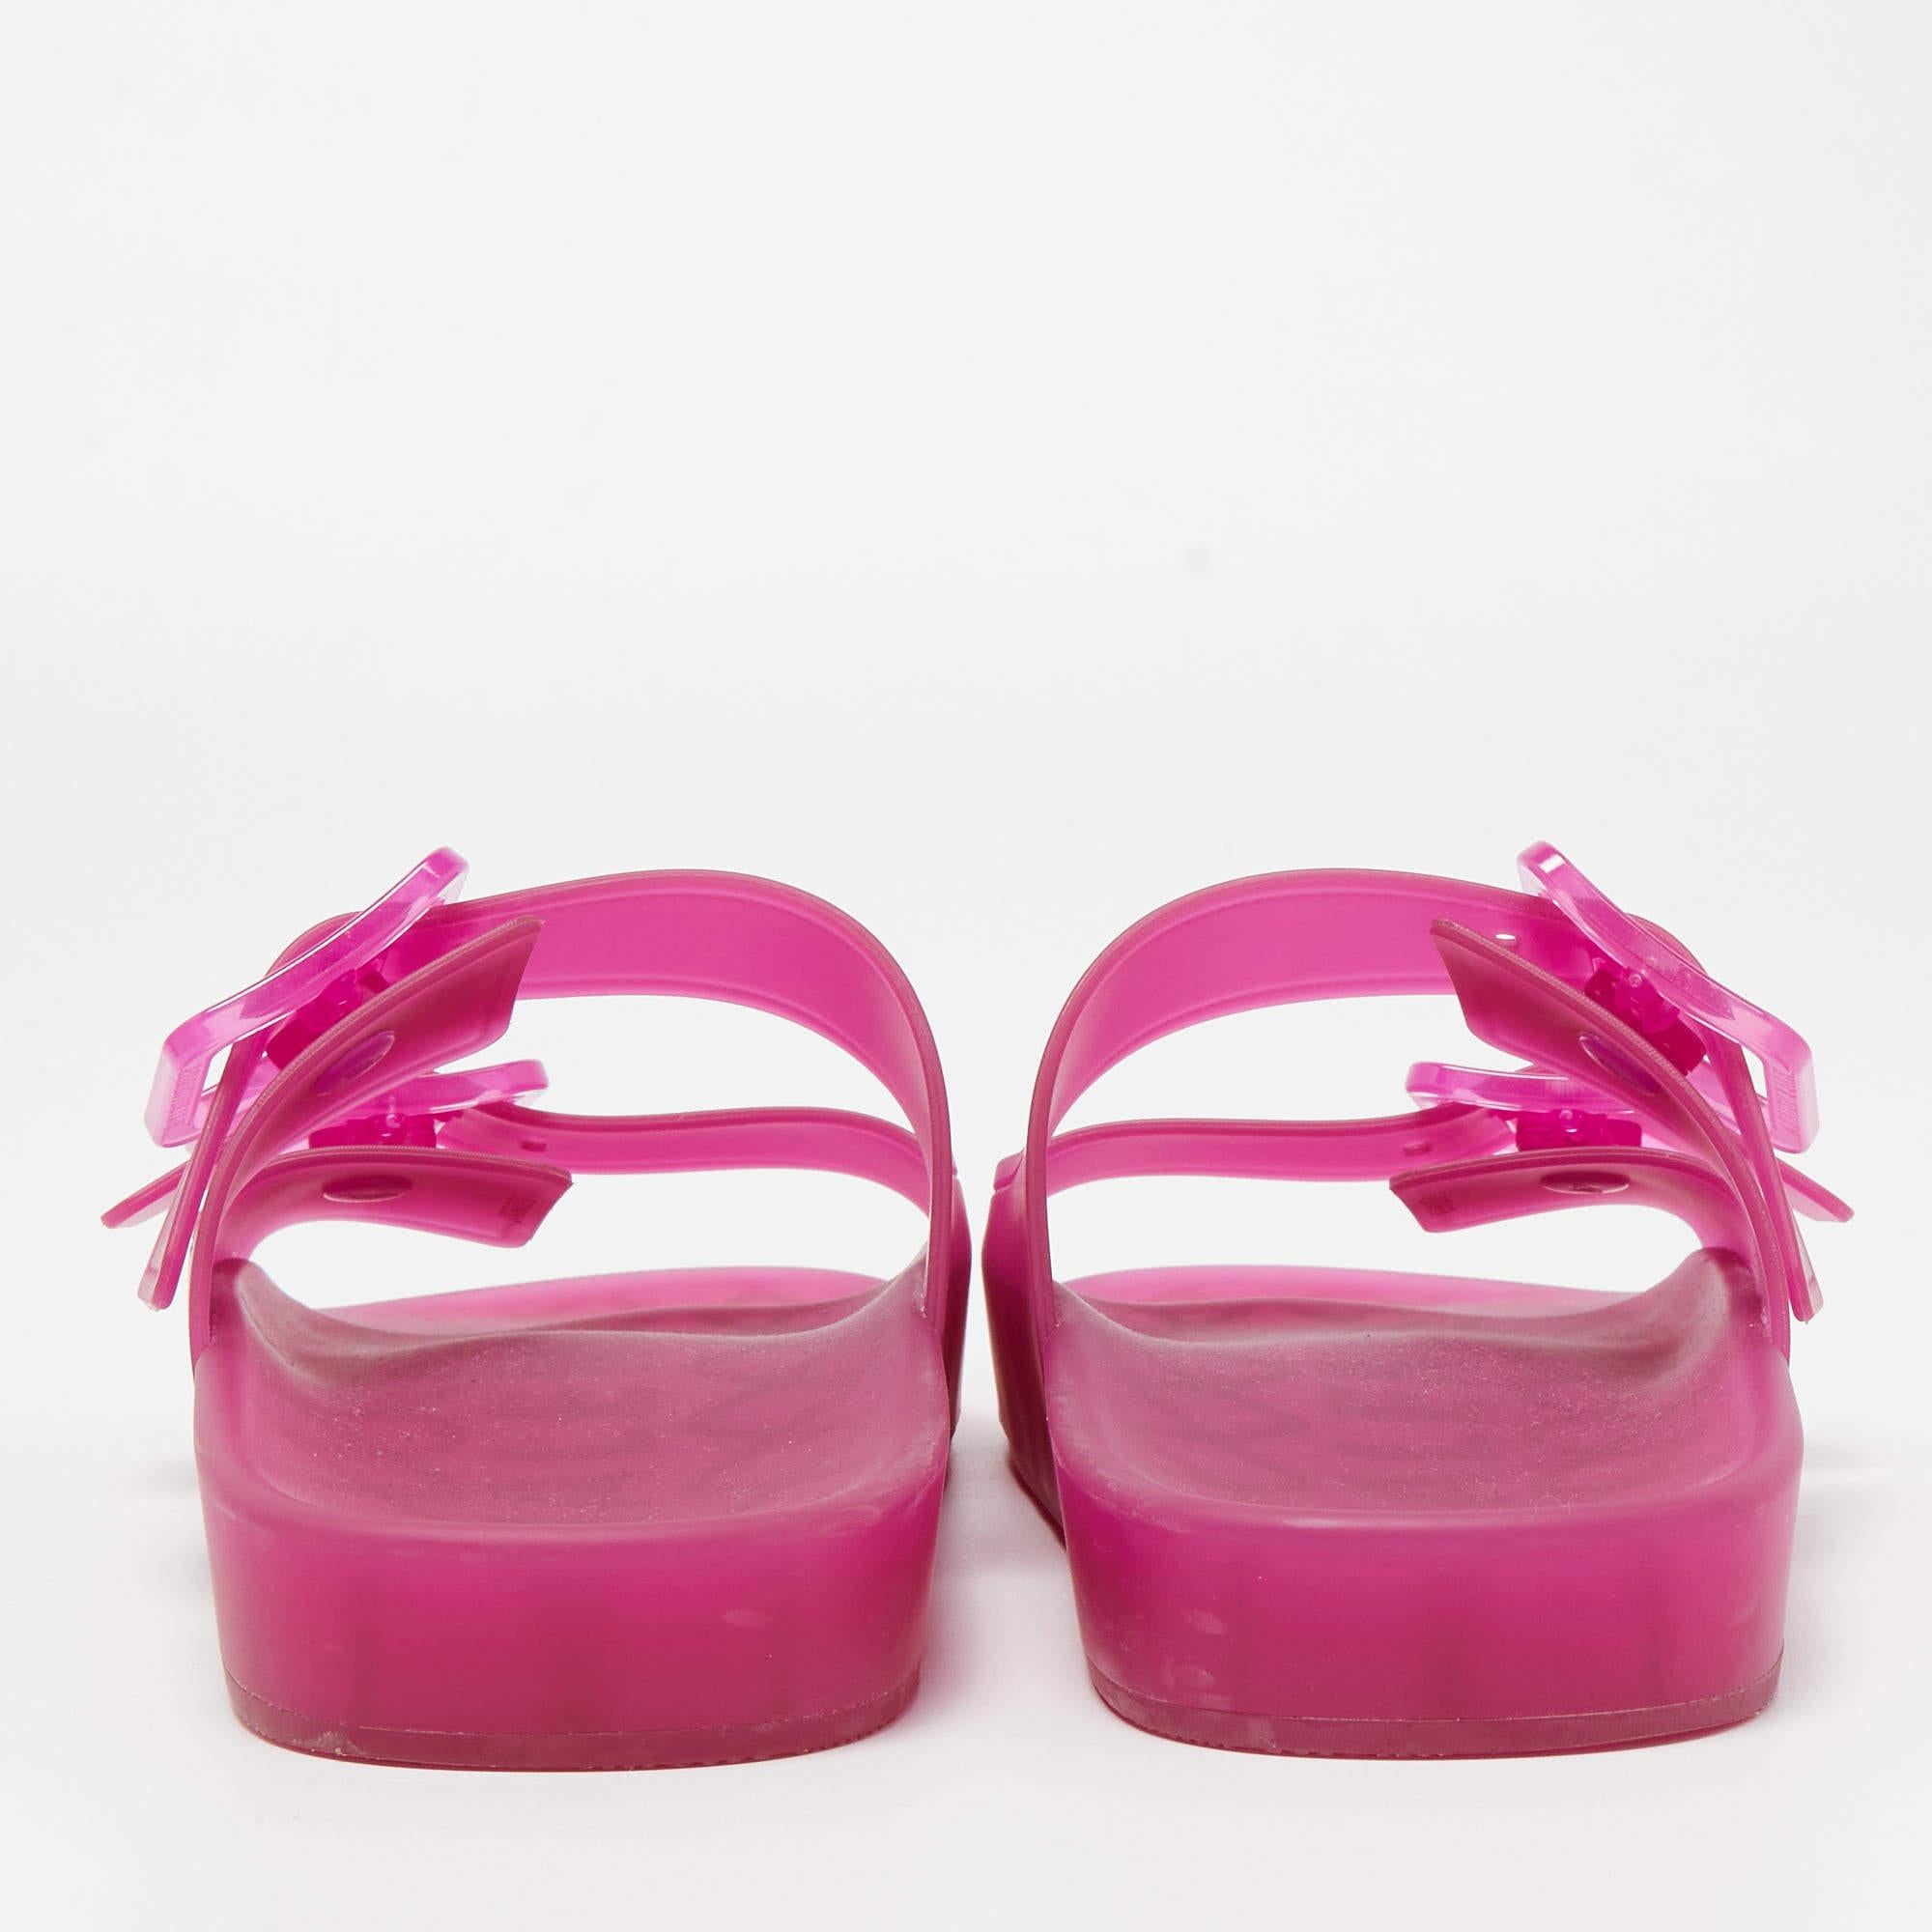 Balenciaga Pink Rubber Double Buckle Detail Flat Sandals Size 38 In Good Condition For Sale In Dubai, Al Qouz 2